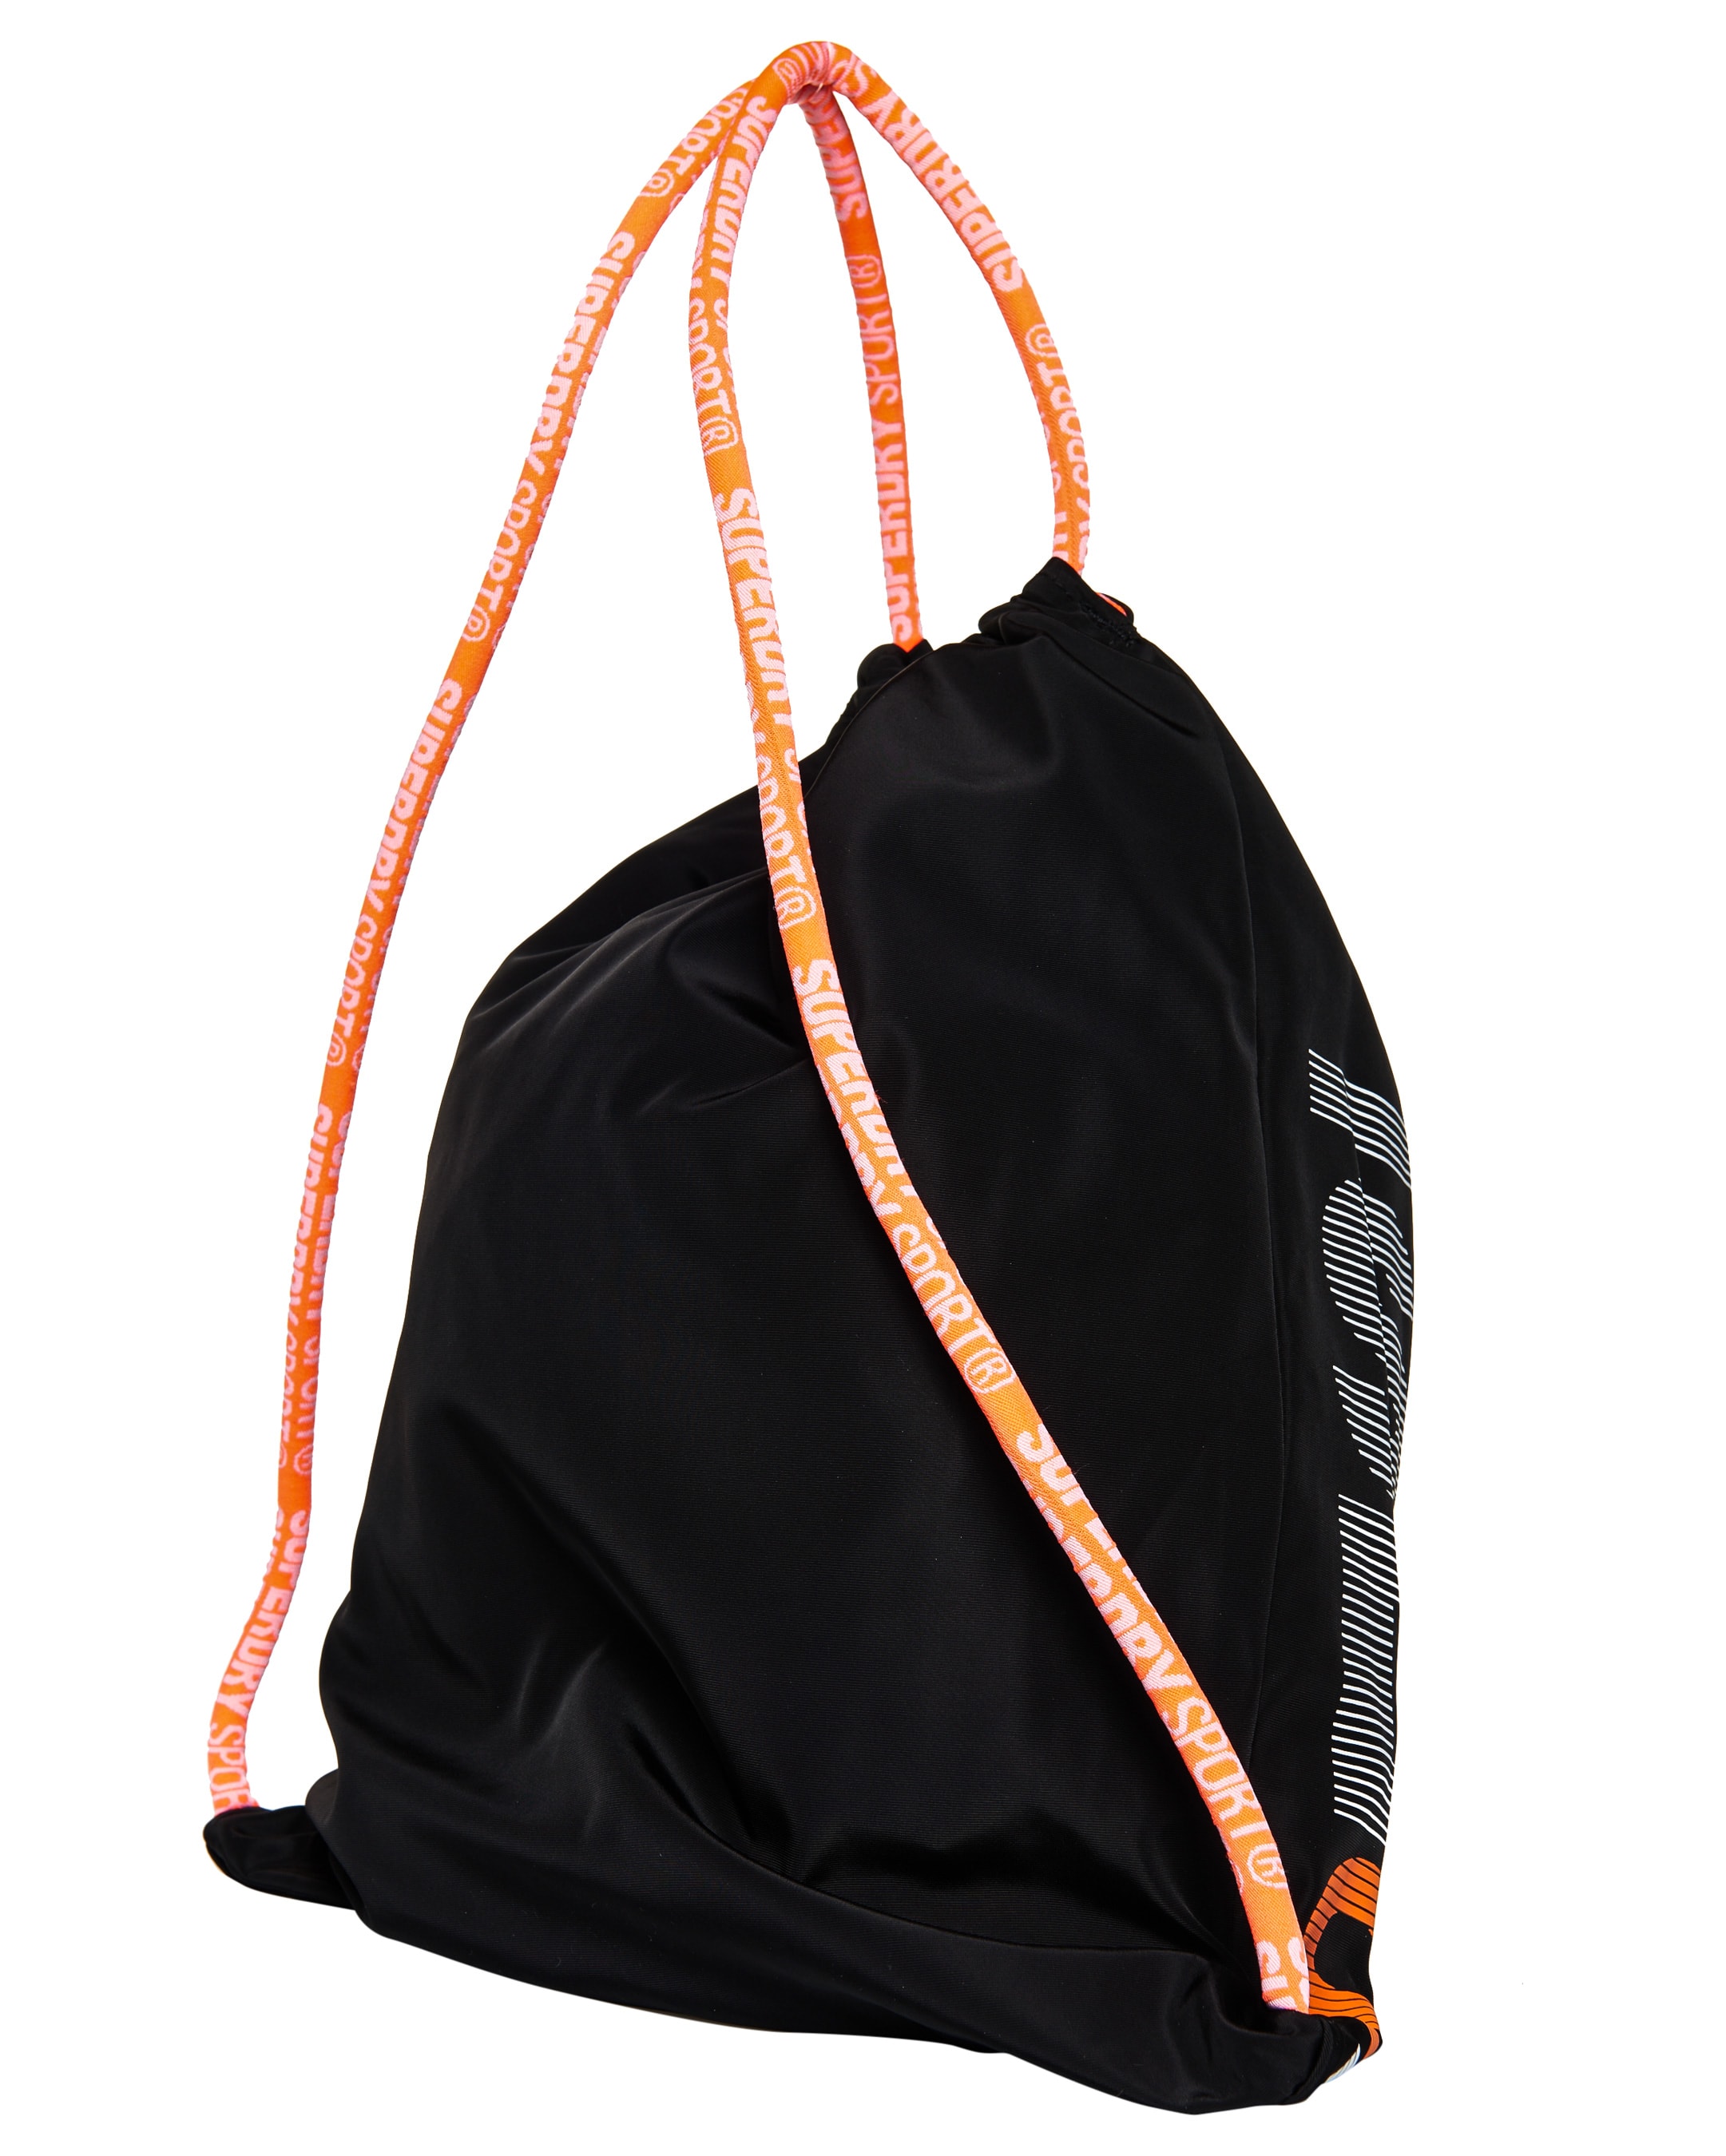 Superdry Drawstring Bag - Black/Fluro Orange